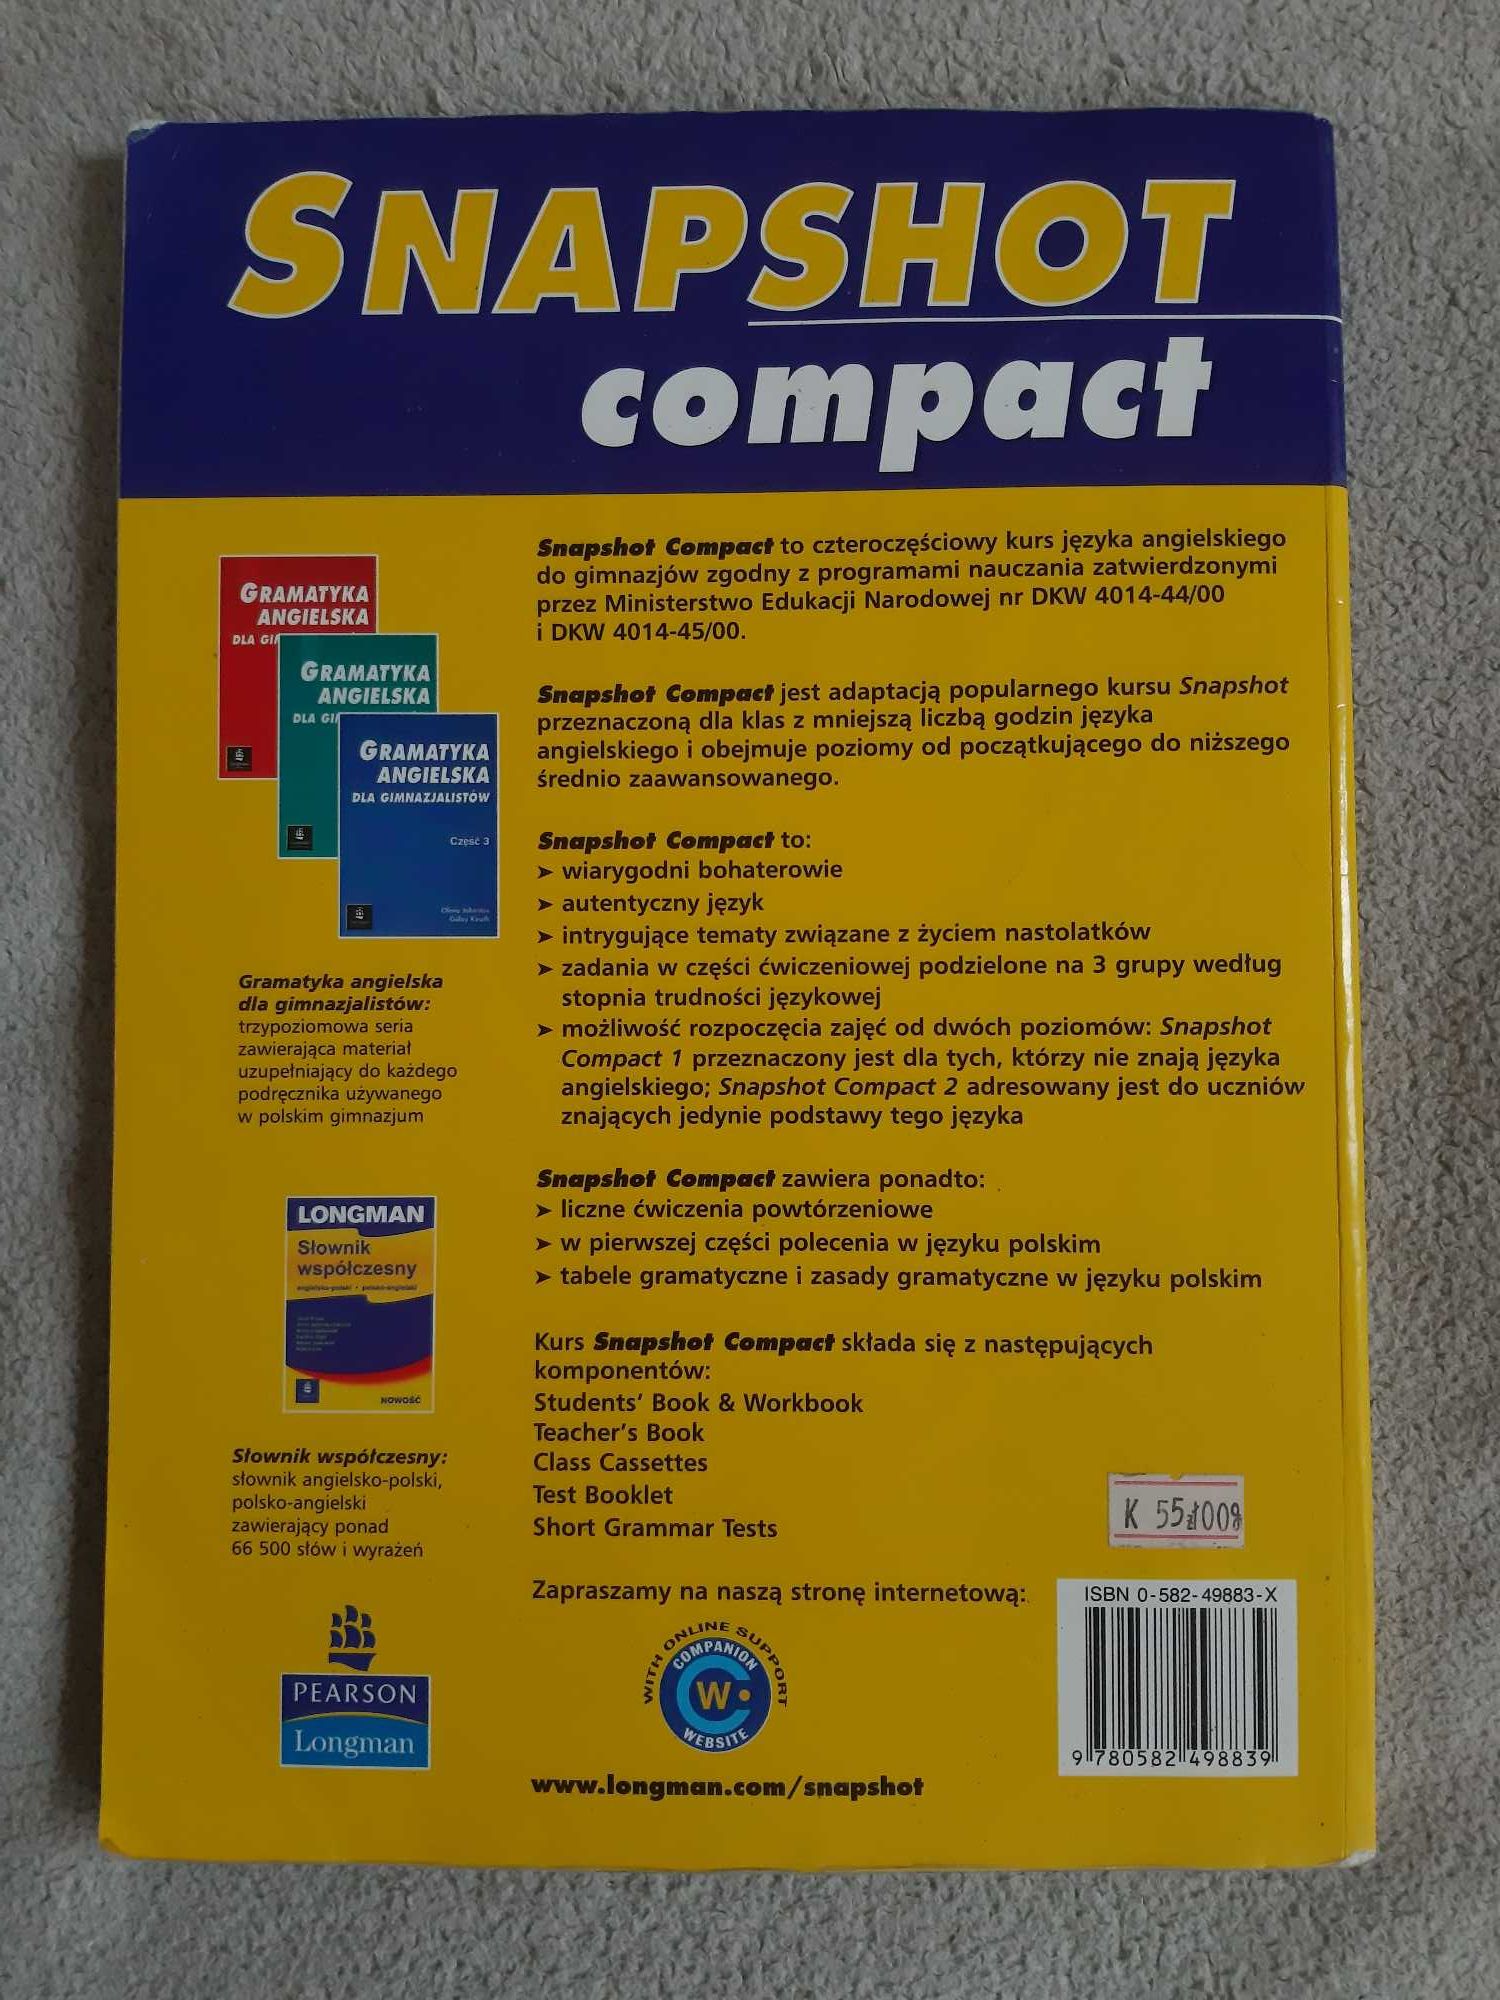 Snapshot compact 1 - Longman